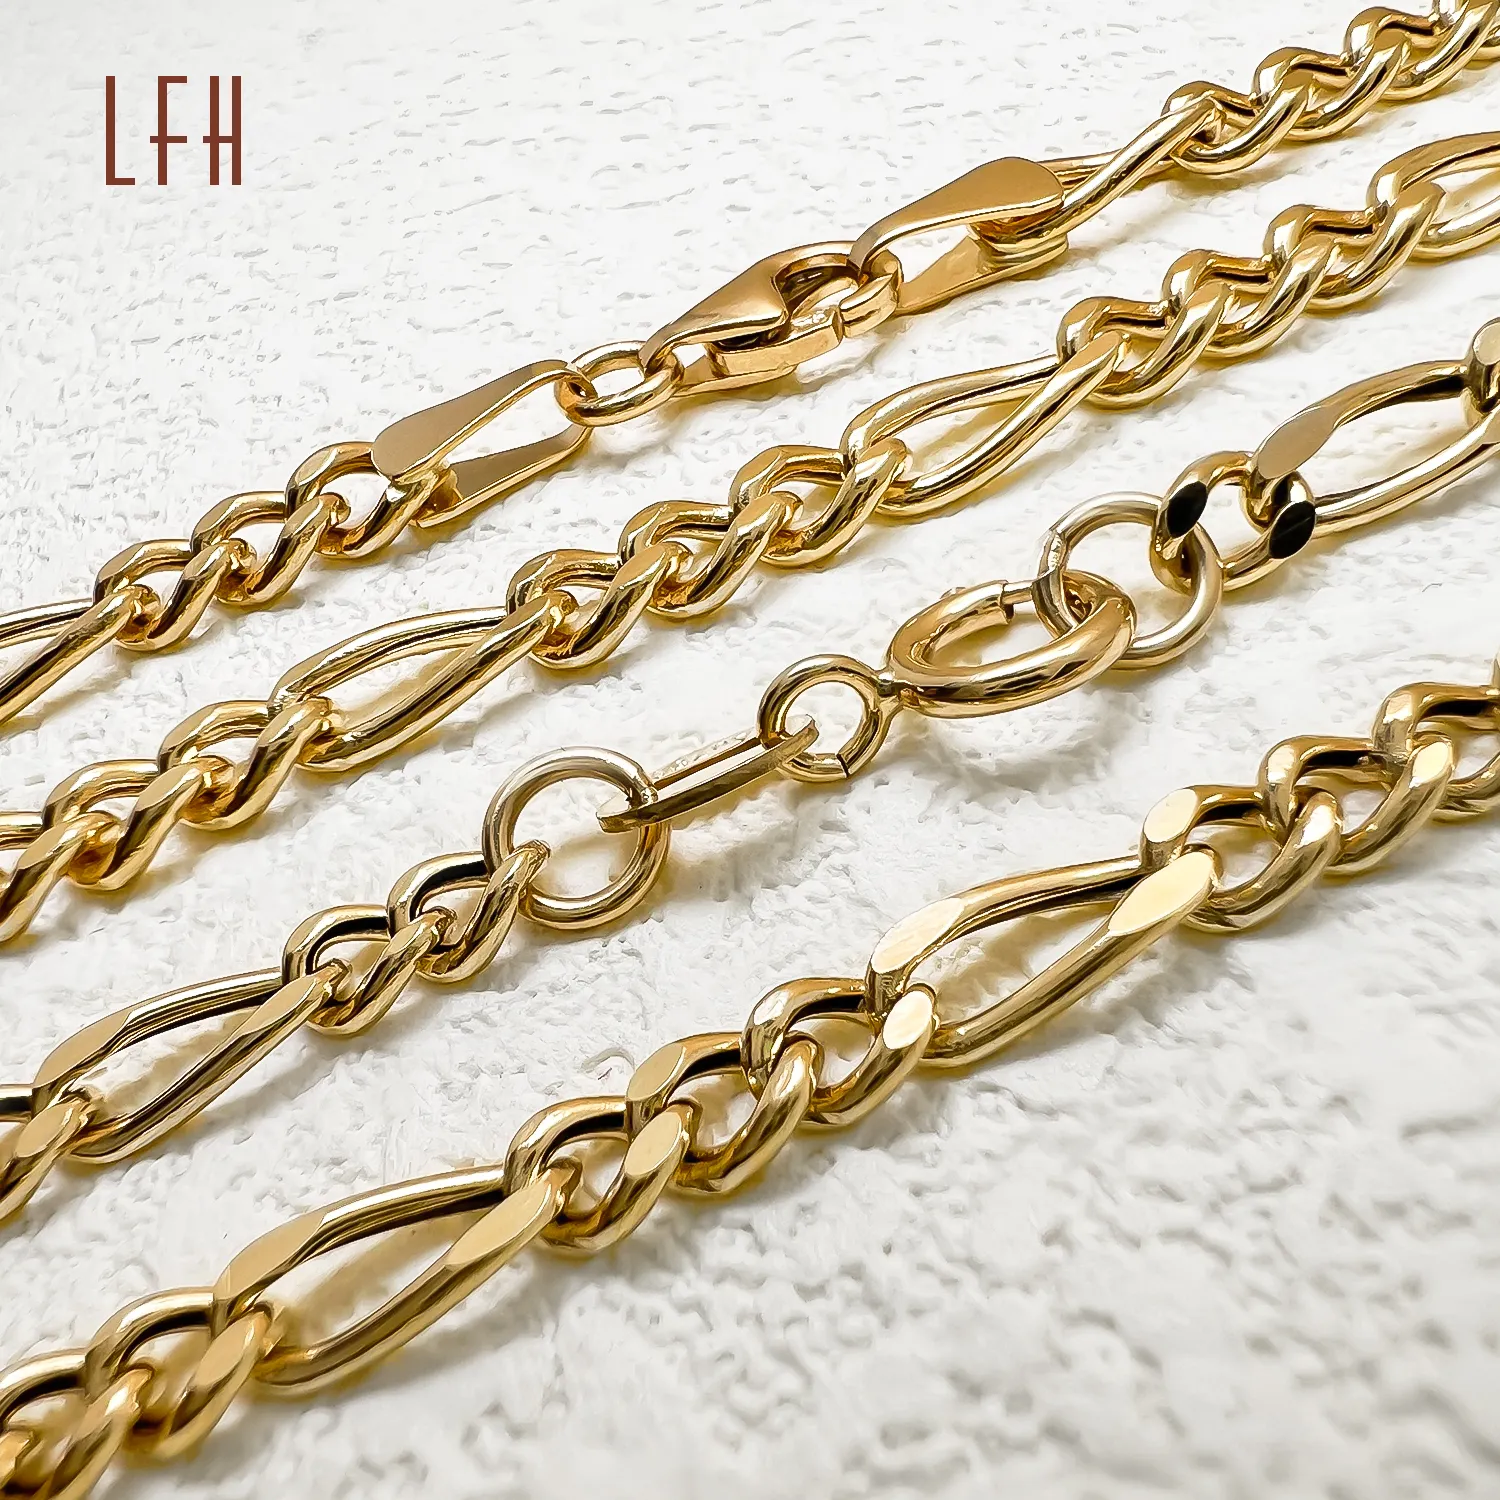 Bijoux en or véritable 18 k, chaîne Figaro en or massif 18 k, collier, bijoux en or véritable 18 carats, offre spéciale